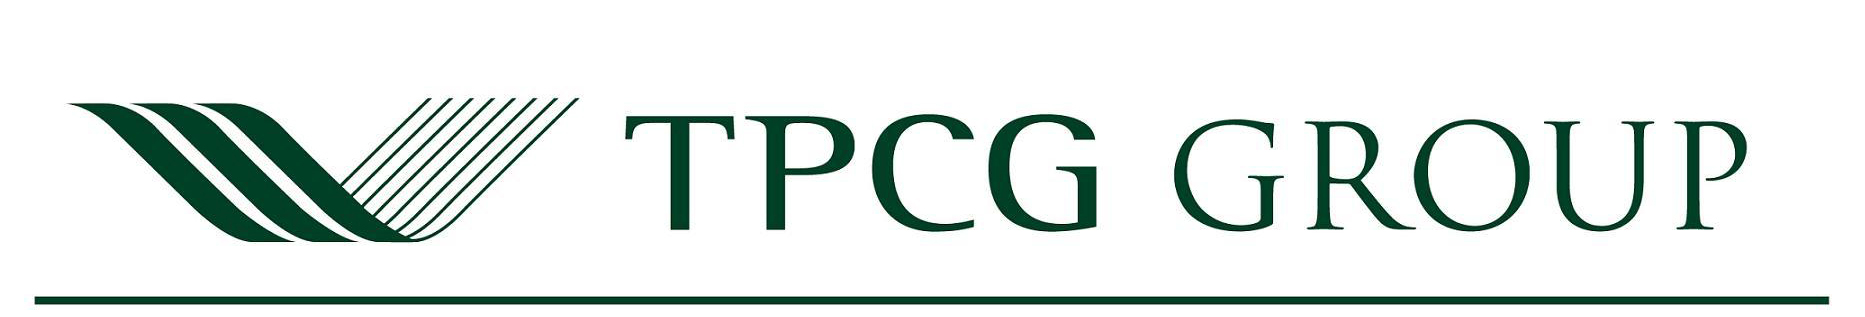 TPCG Group 2015